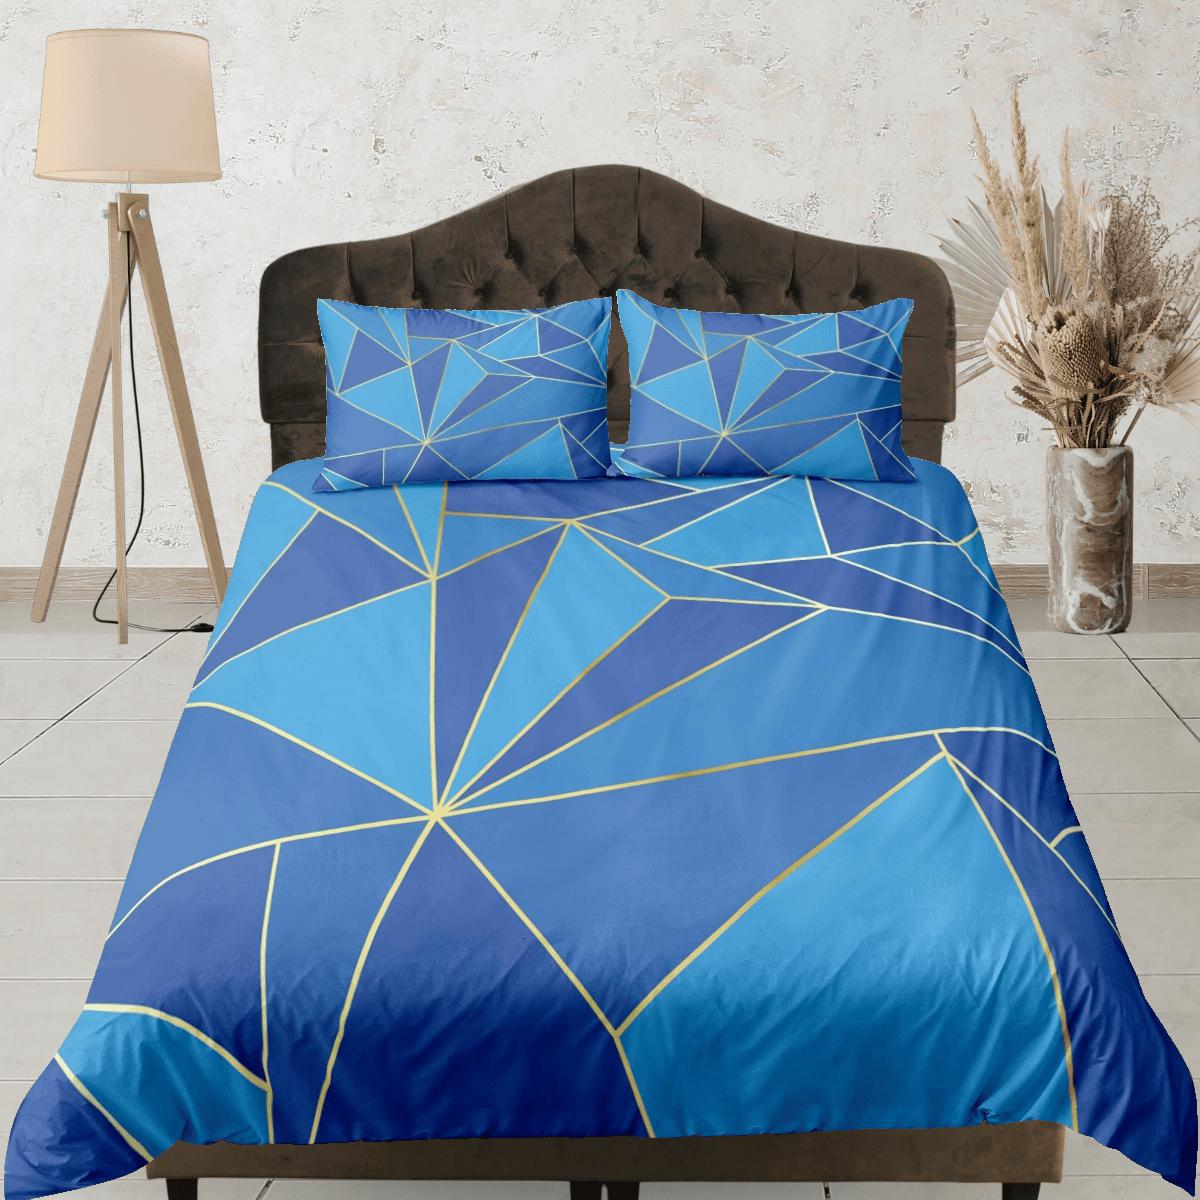 daintyduvet Blue Geometric Bedding Set Luxury Duvet Cover, Aesthetic Zipper Bedding, Printed Doona Cover, California King, Queen, Full, Twin, Crib